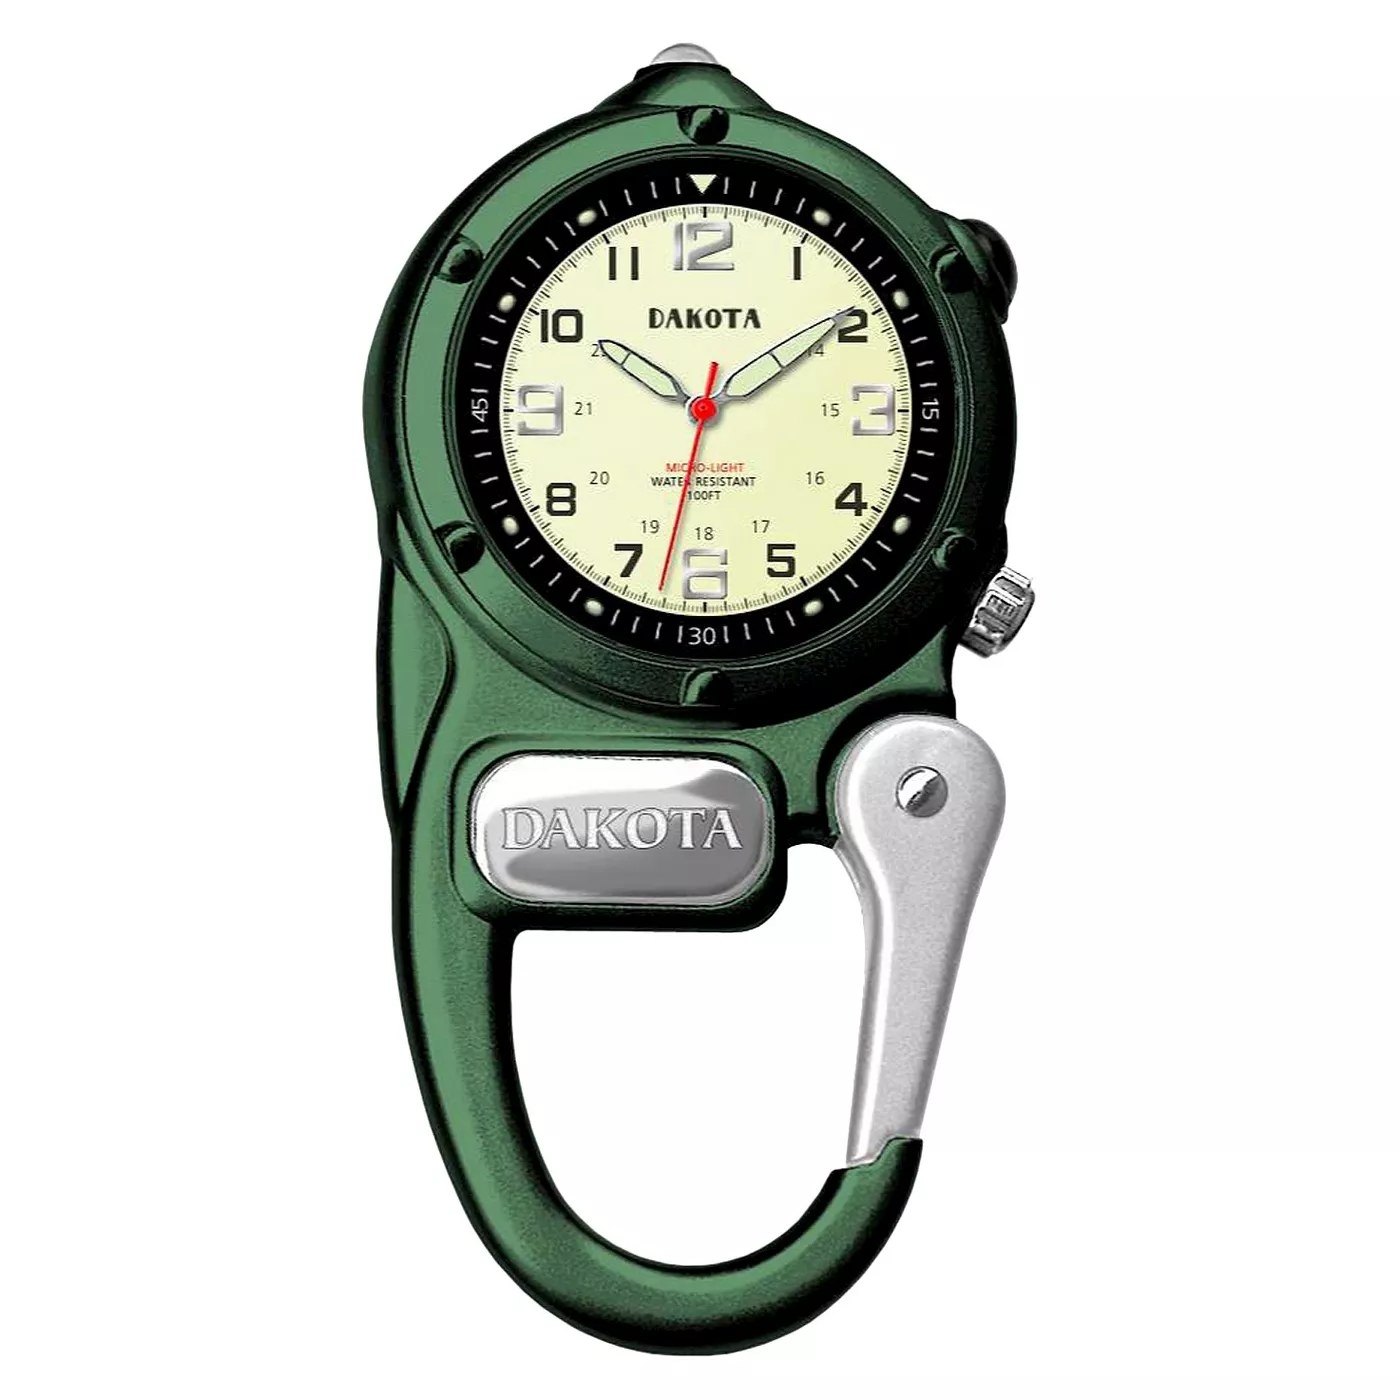 The green mini clip microlight watch